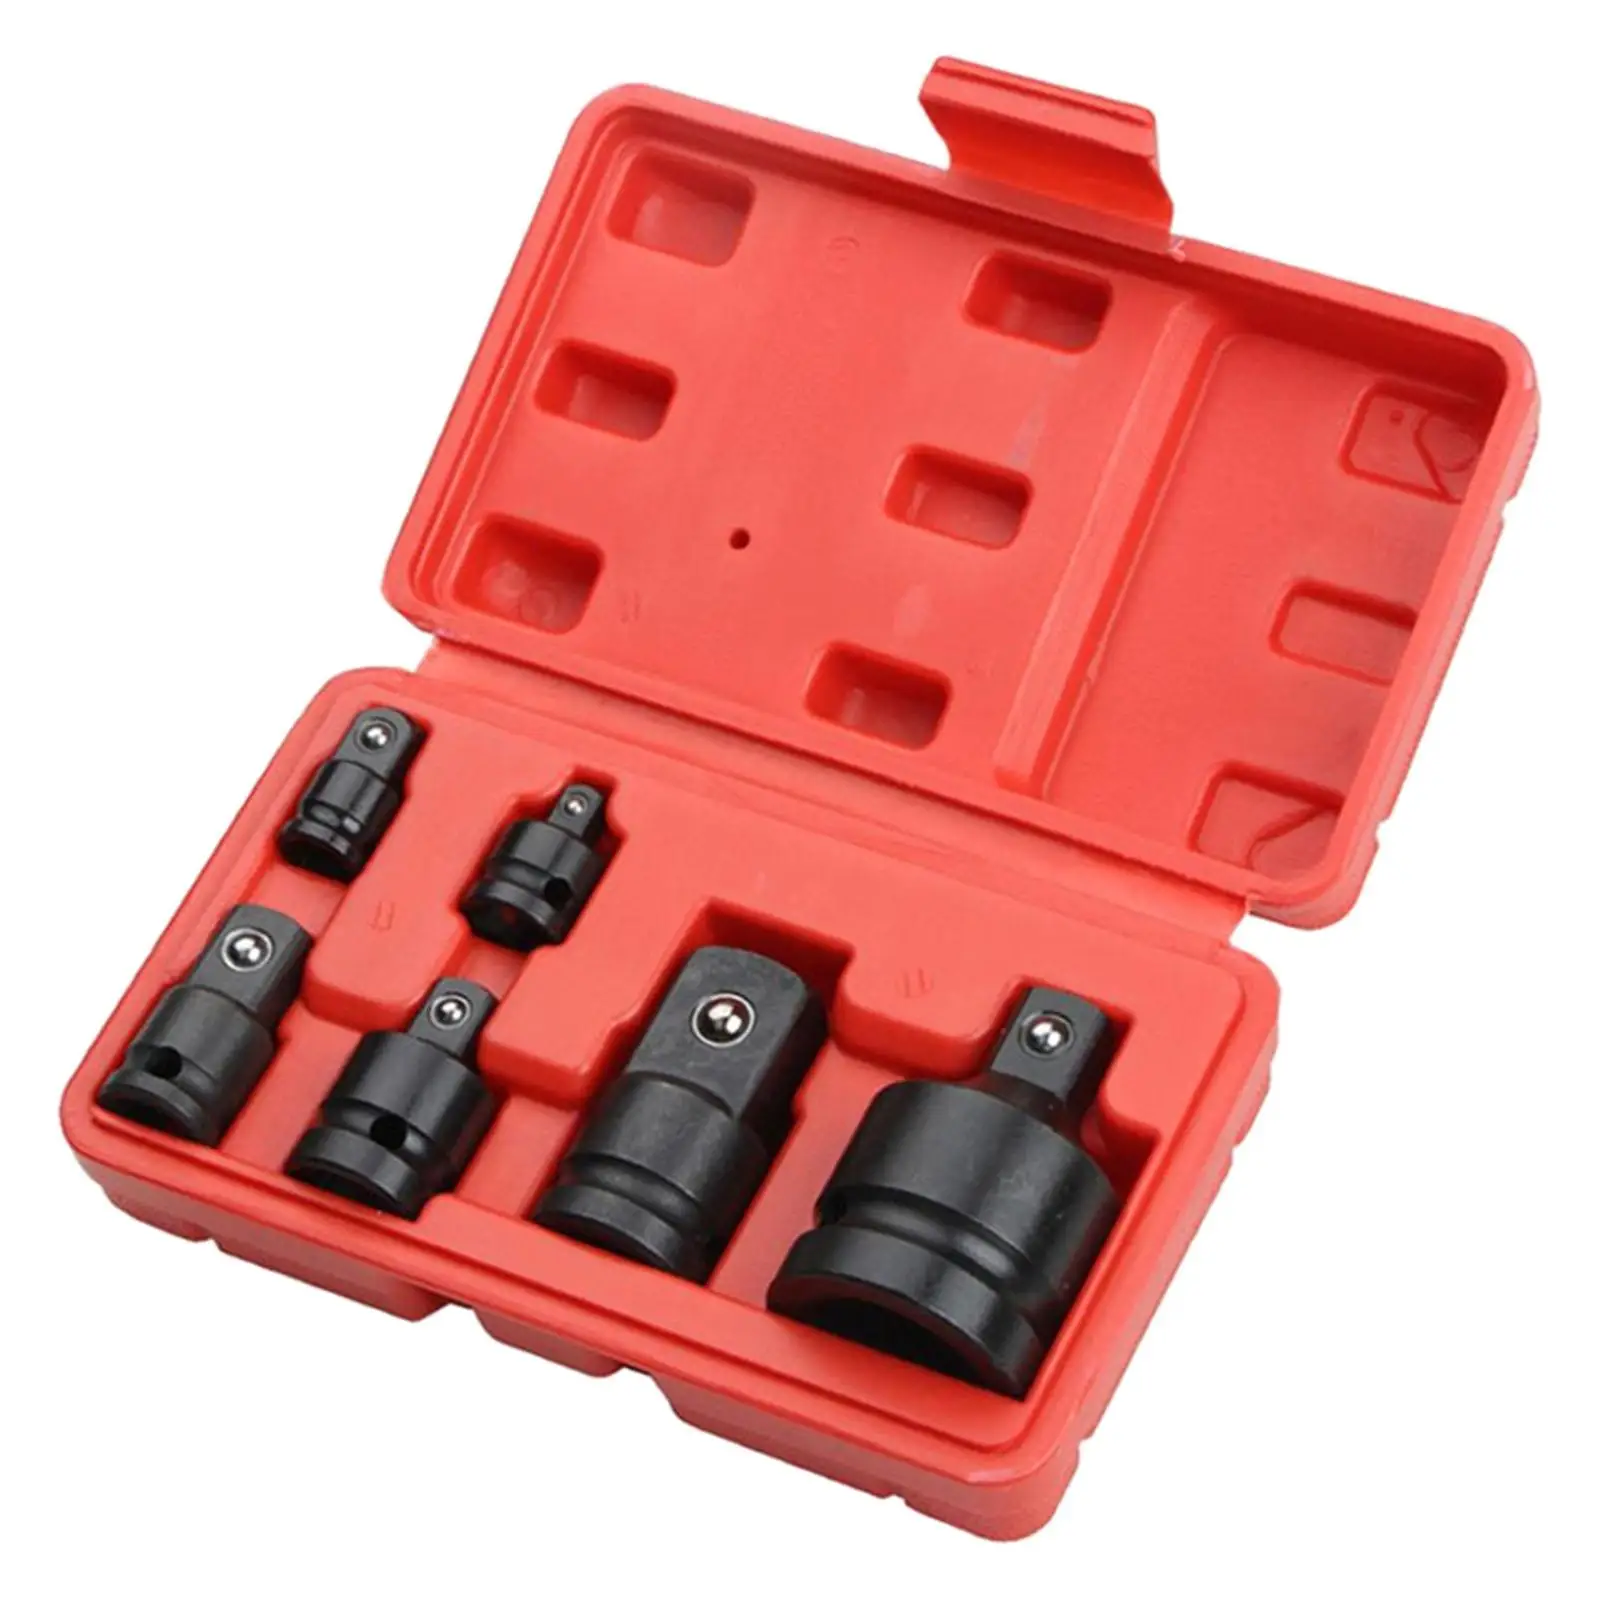 6Pcs Ratchet Adapter, Conversions Impact Universal Joint Set Hand Tool Auto Repair Parts Extension